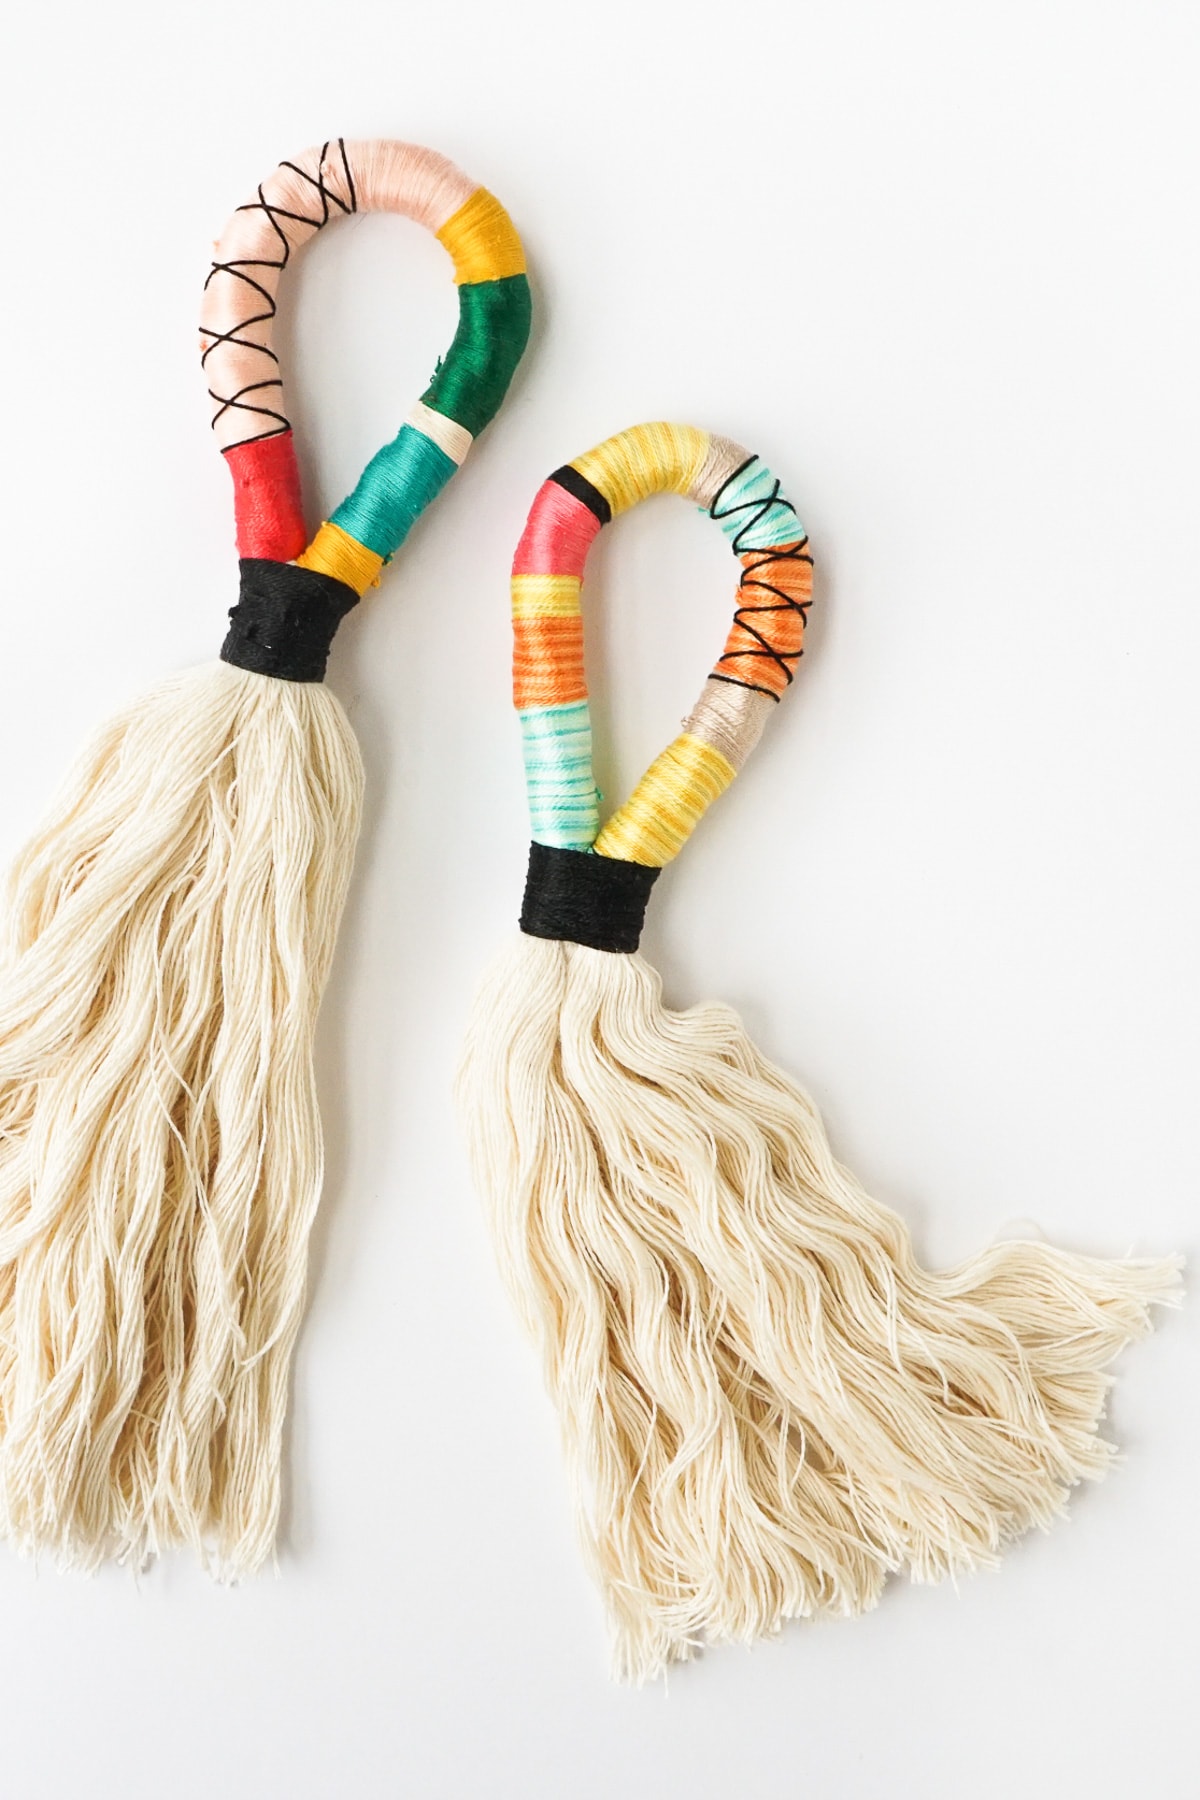 DIY Door Handle Tassels by Ashley Rose of Sugar & Cloth, a top lifestyle blog in Houston, Texas #DIY #door #tassels #fringe #colorful #doorhandle #homedecor #simple #rope #diyhomedecor